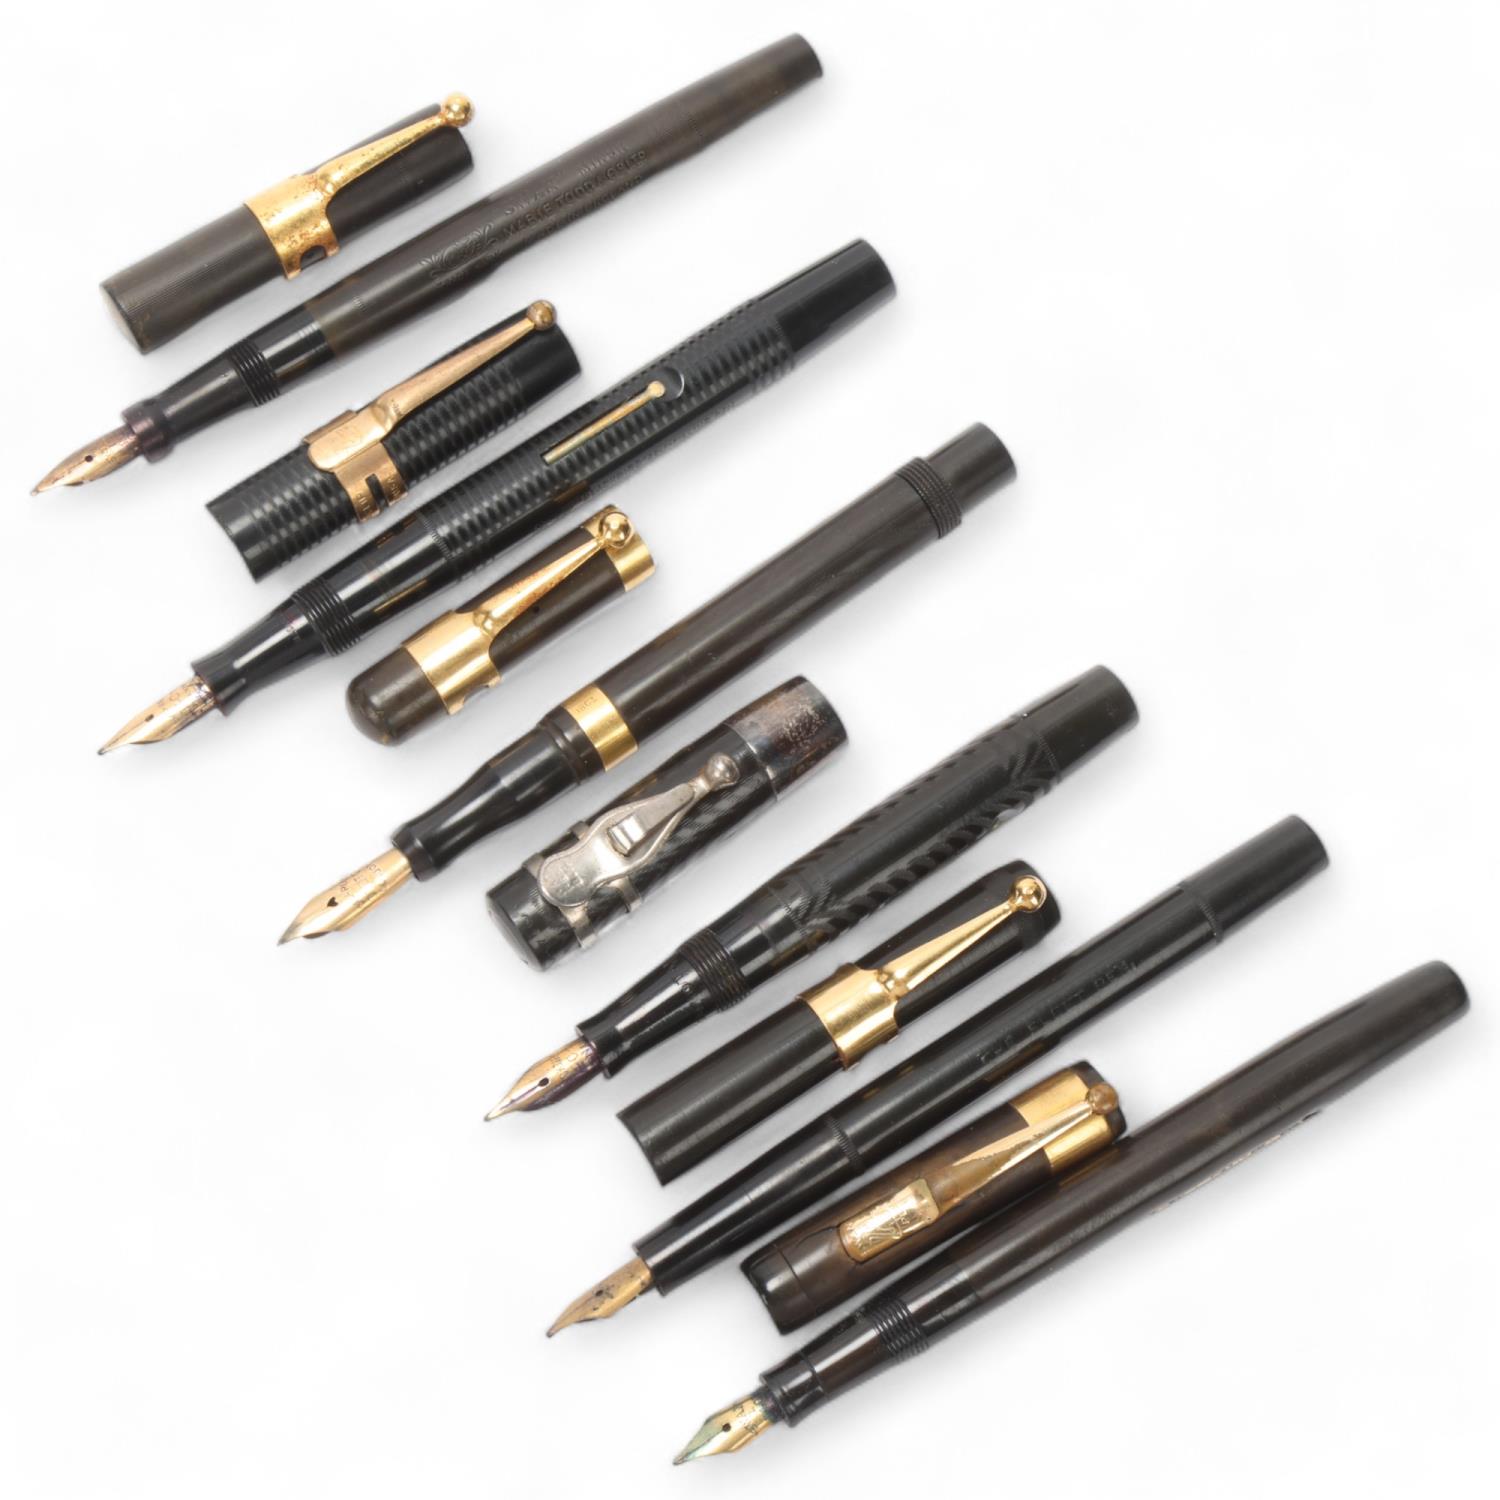 6 early 20th century fountain pens, Mabie, Todd & Co / Swan - Gaviota, Blackbird, The Fleet, Minor